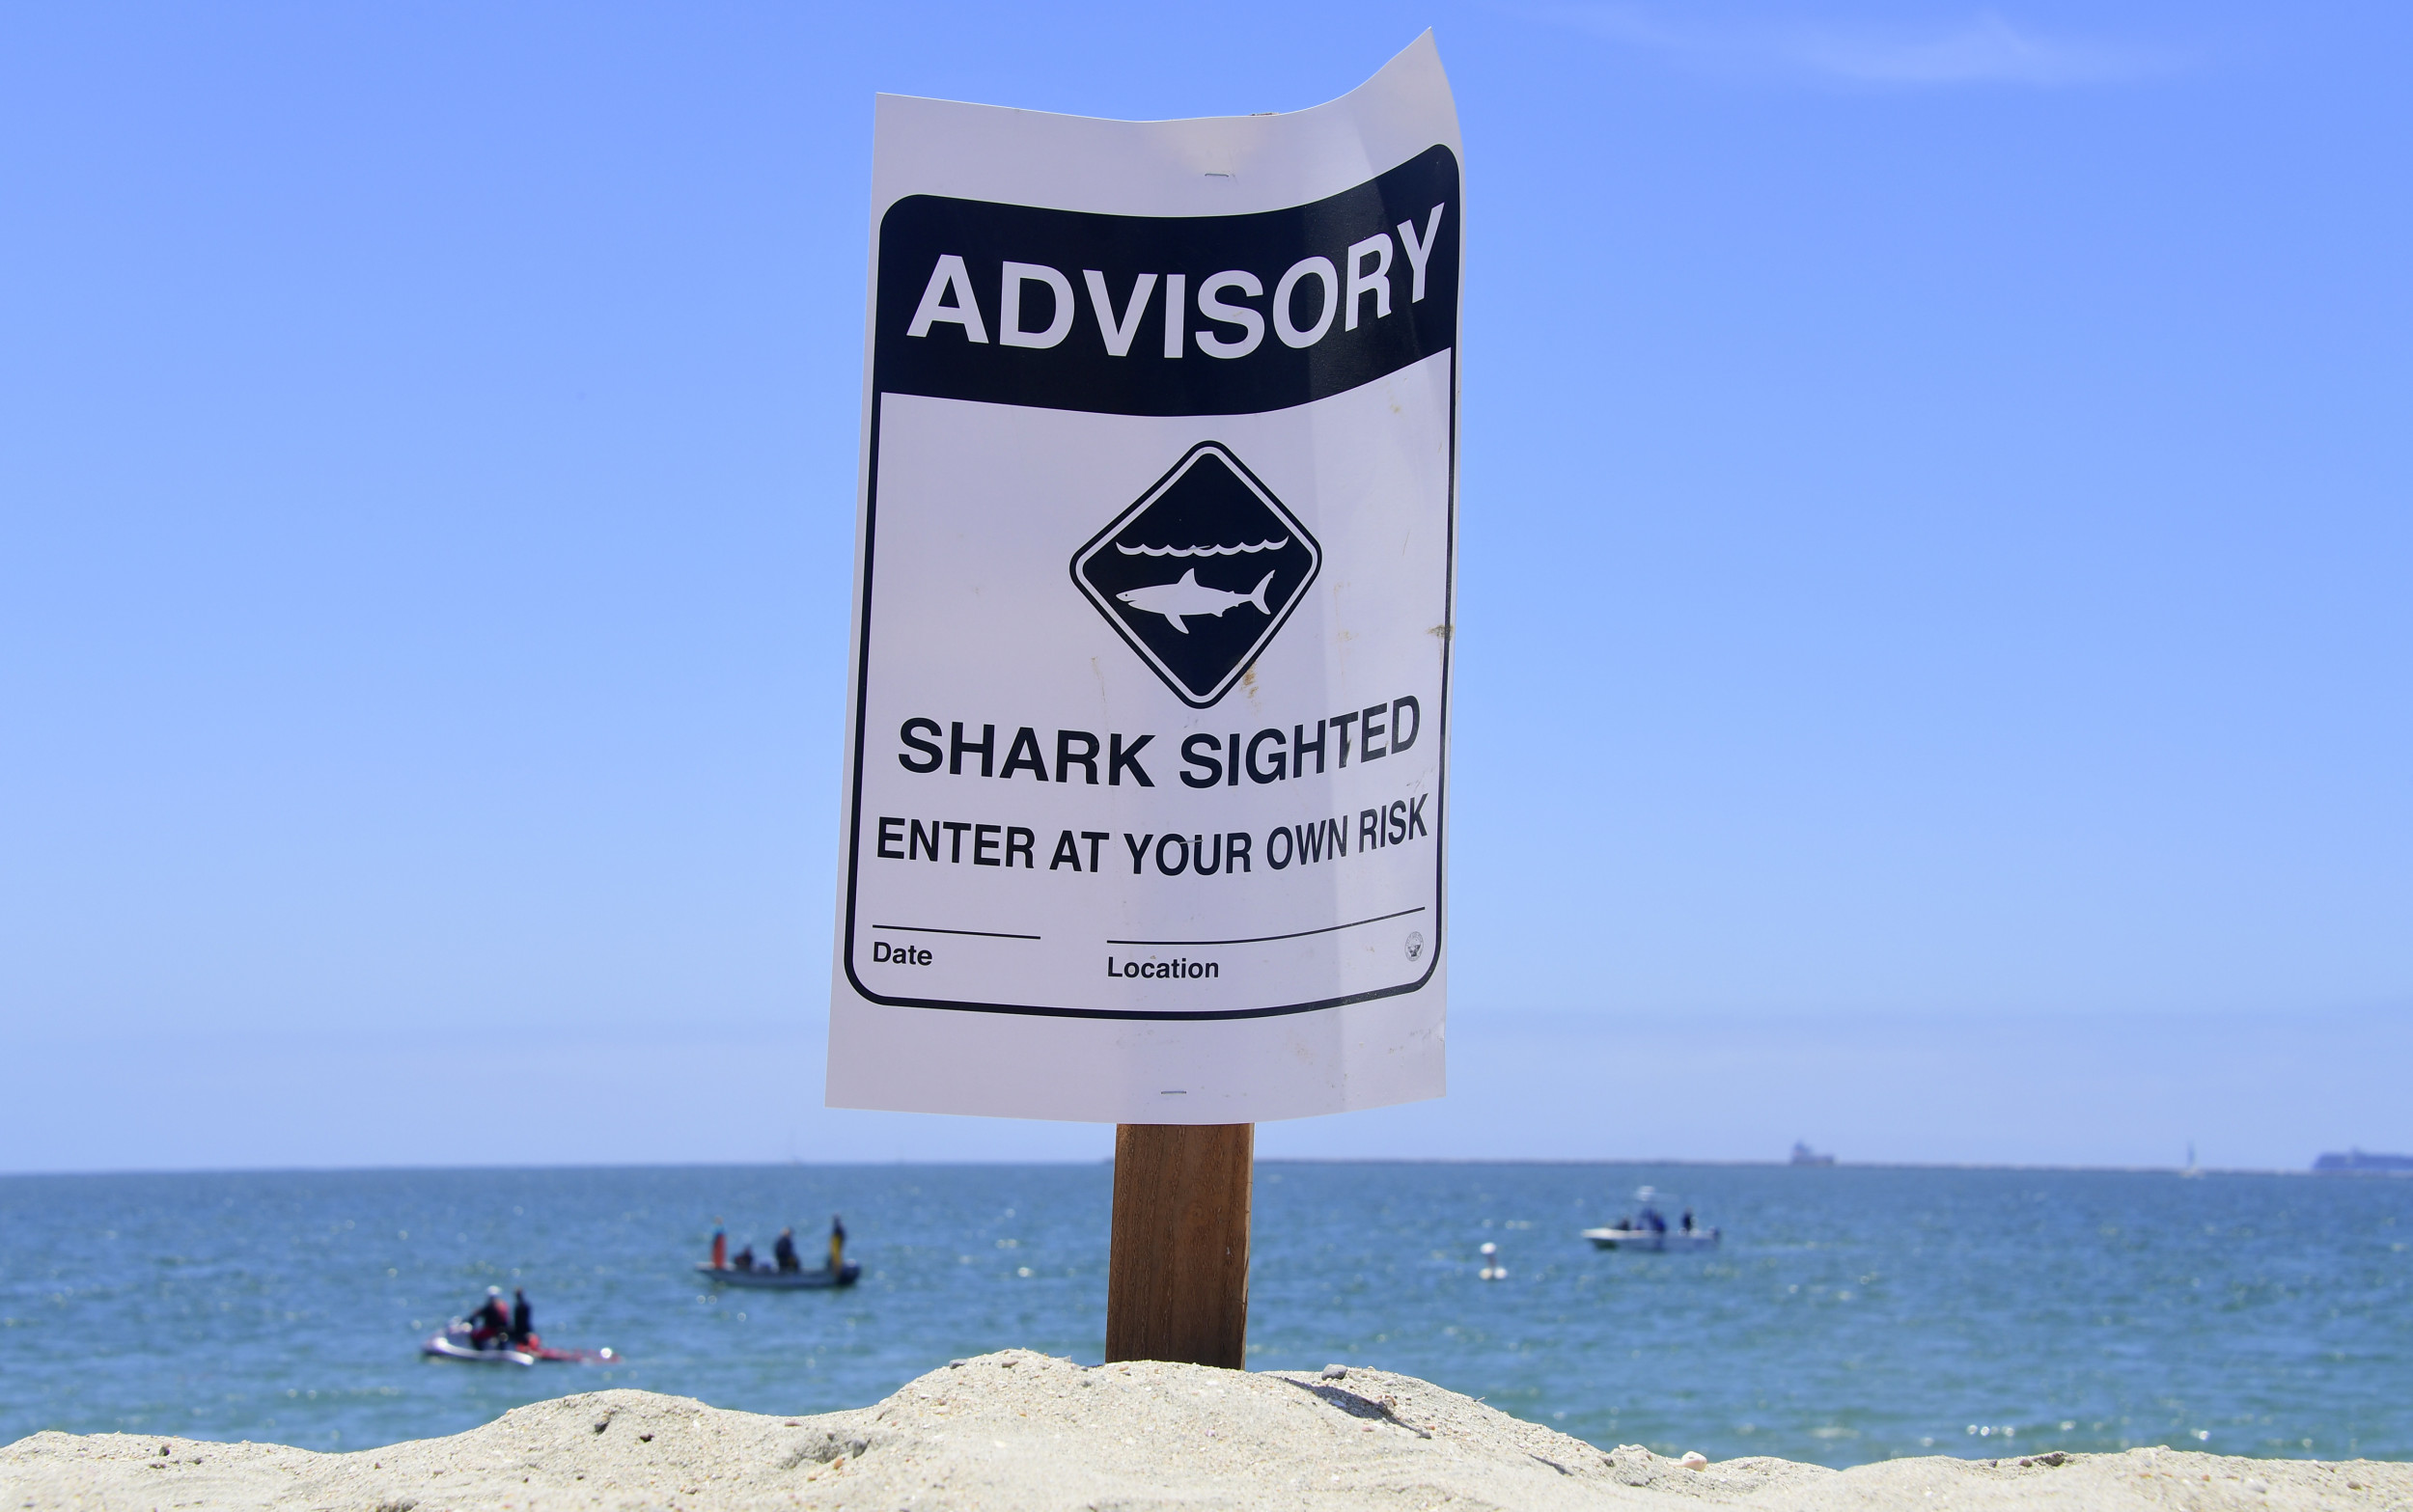 Shark sighting reported off NJ